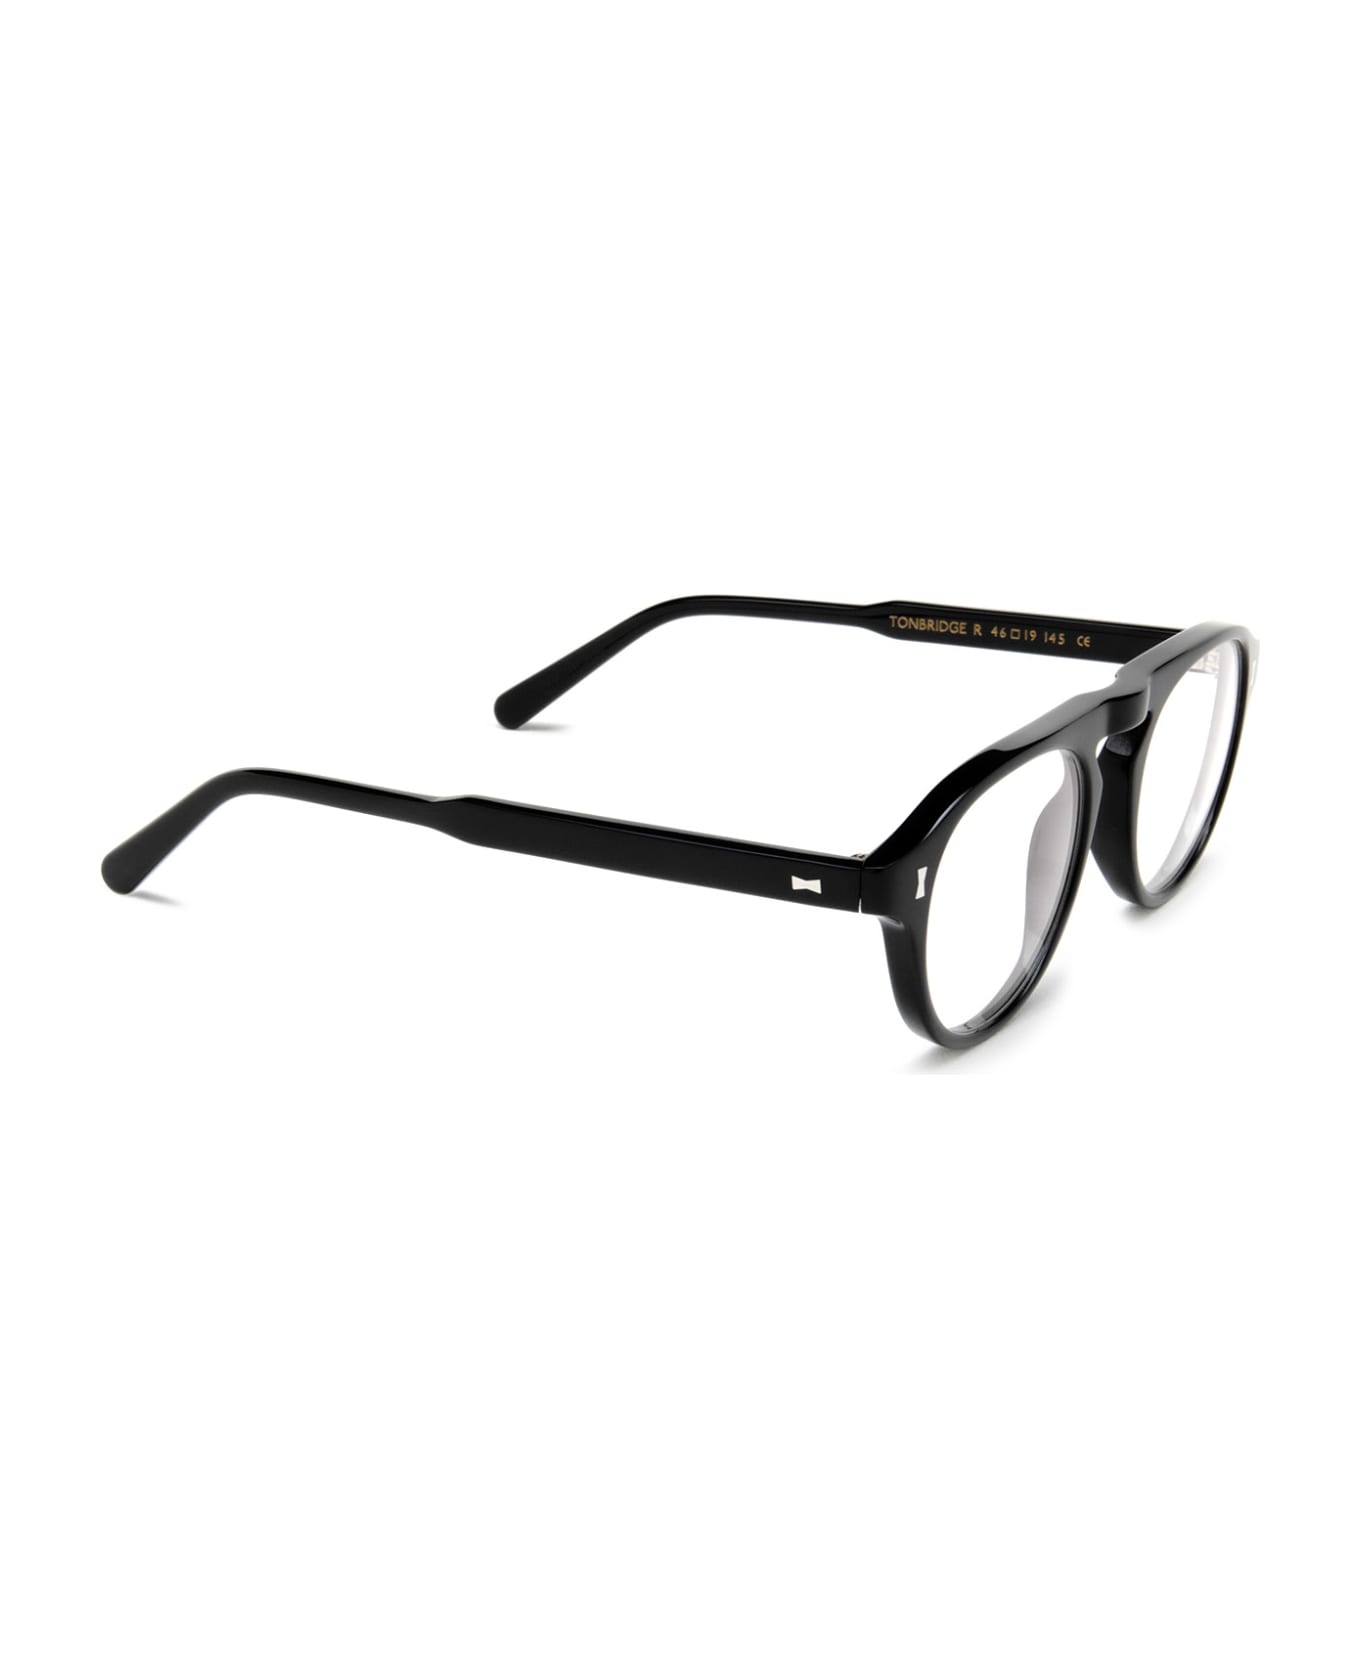 Cubitts Tonbridge Black Glasses - Black アイウェア